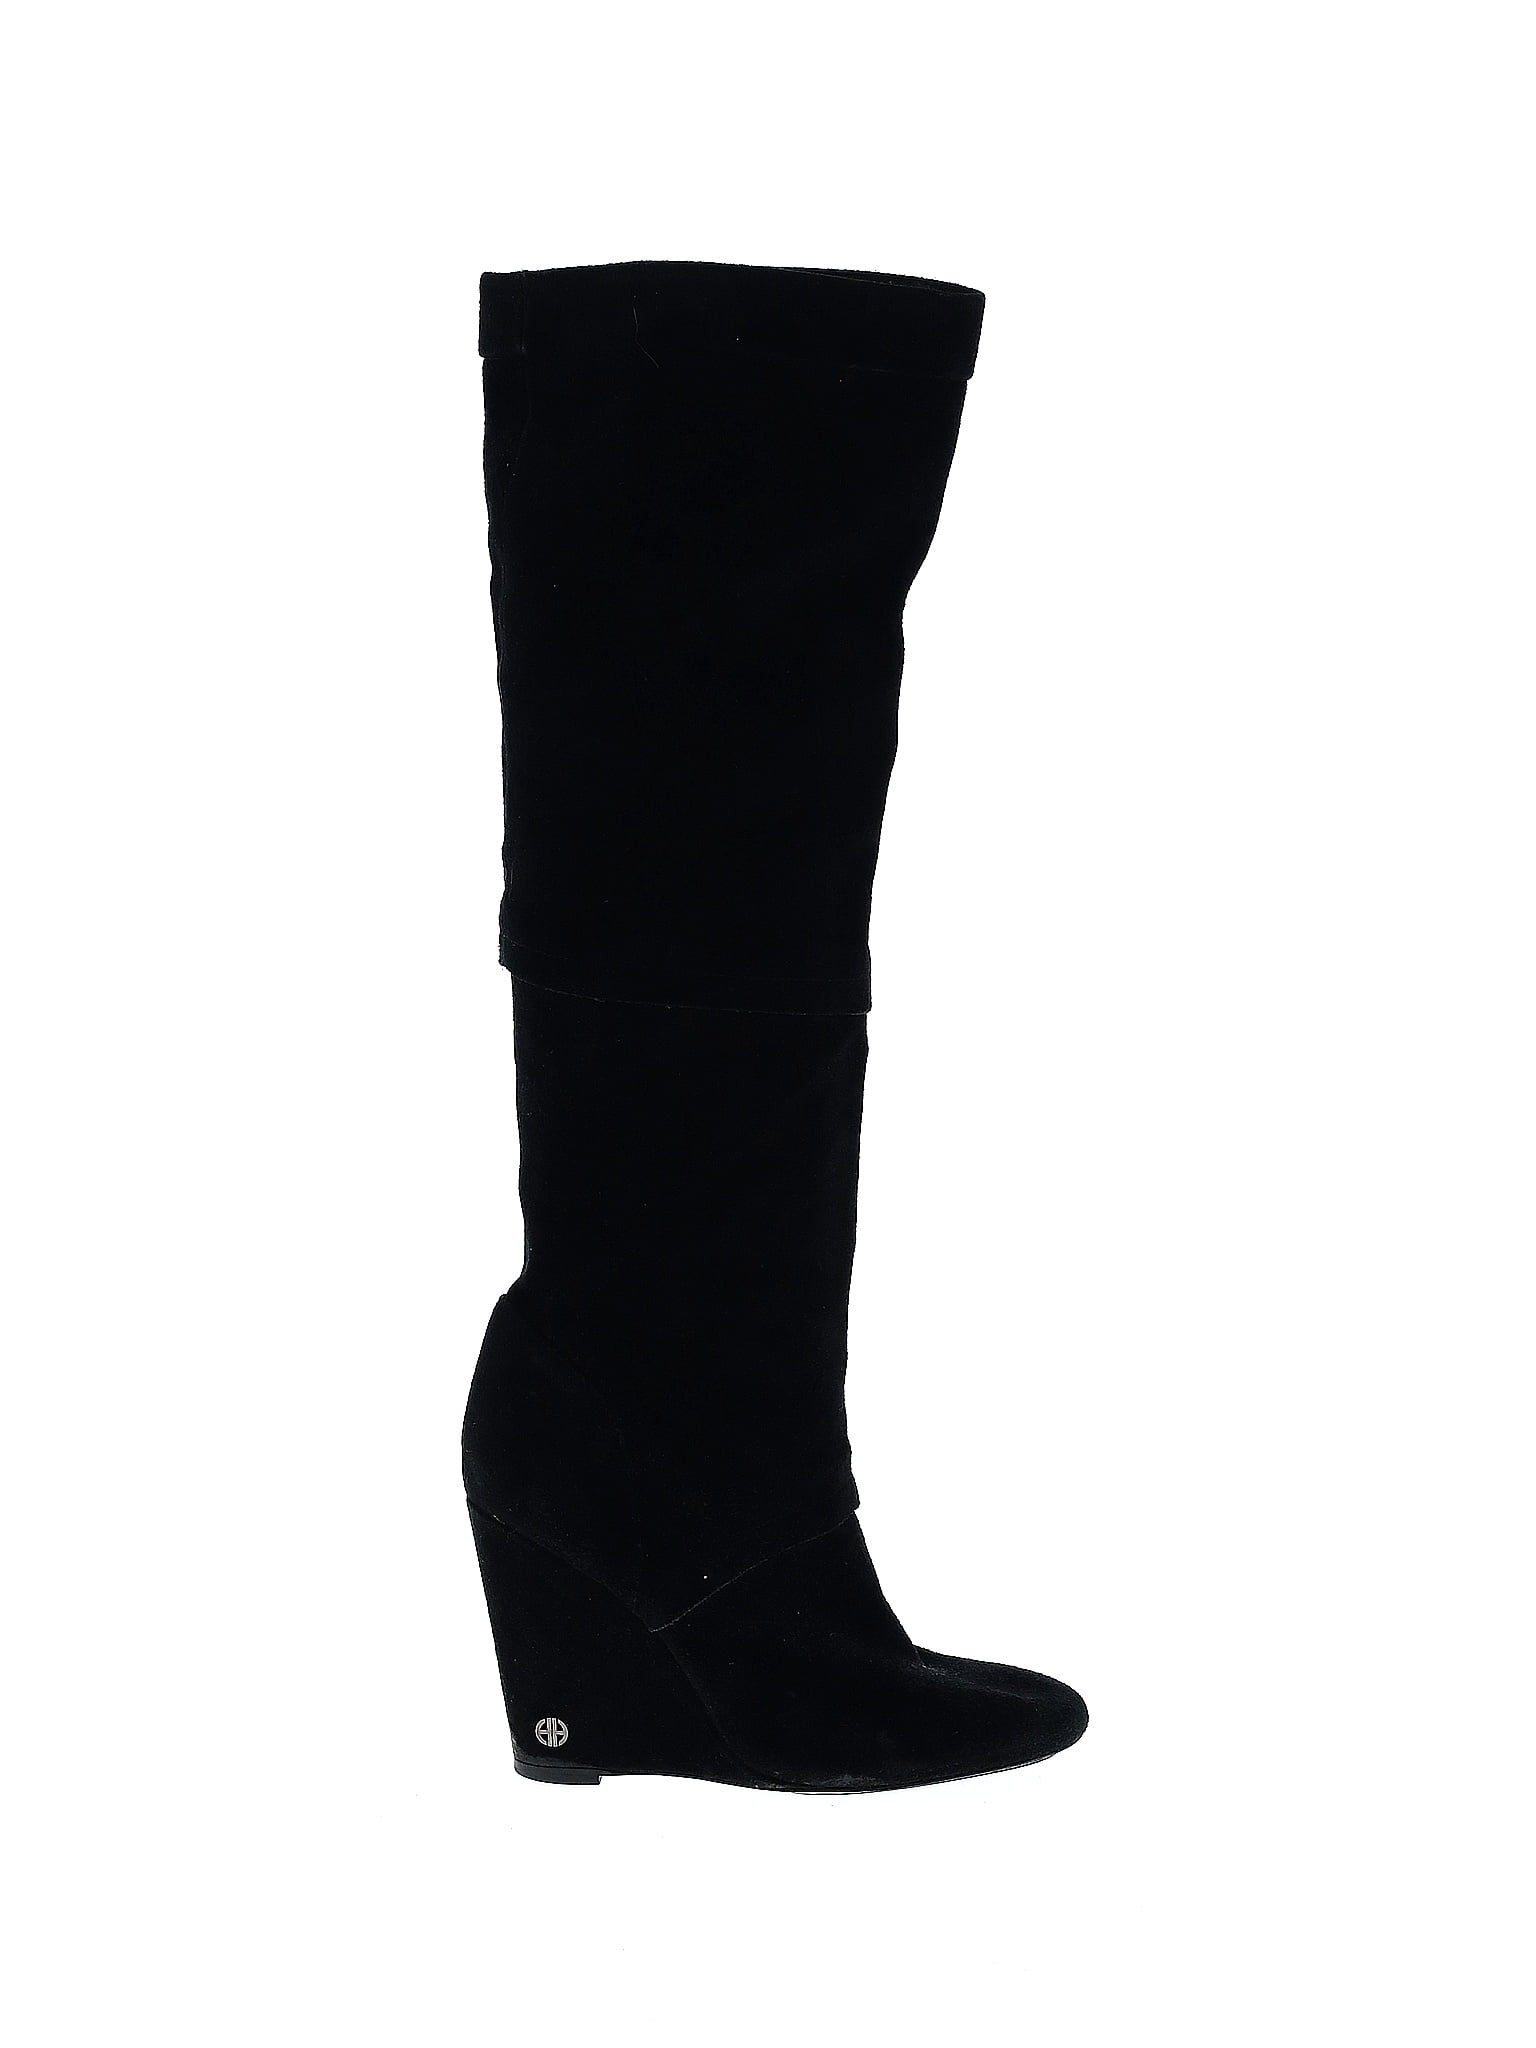 Giani Bernini Solid Black Boots Size 38.5 (EU) - 60% off | thredUP